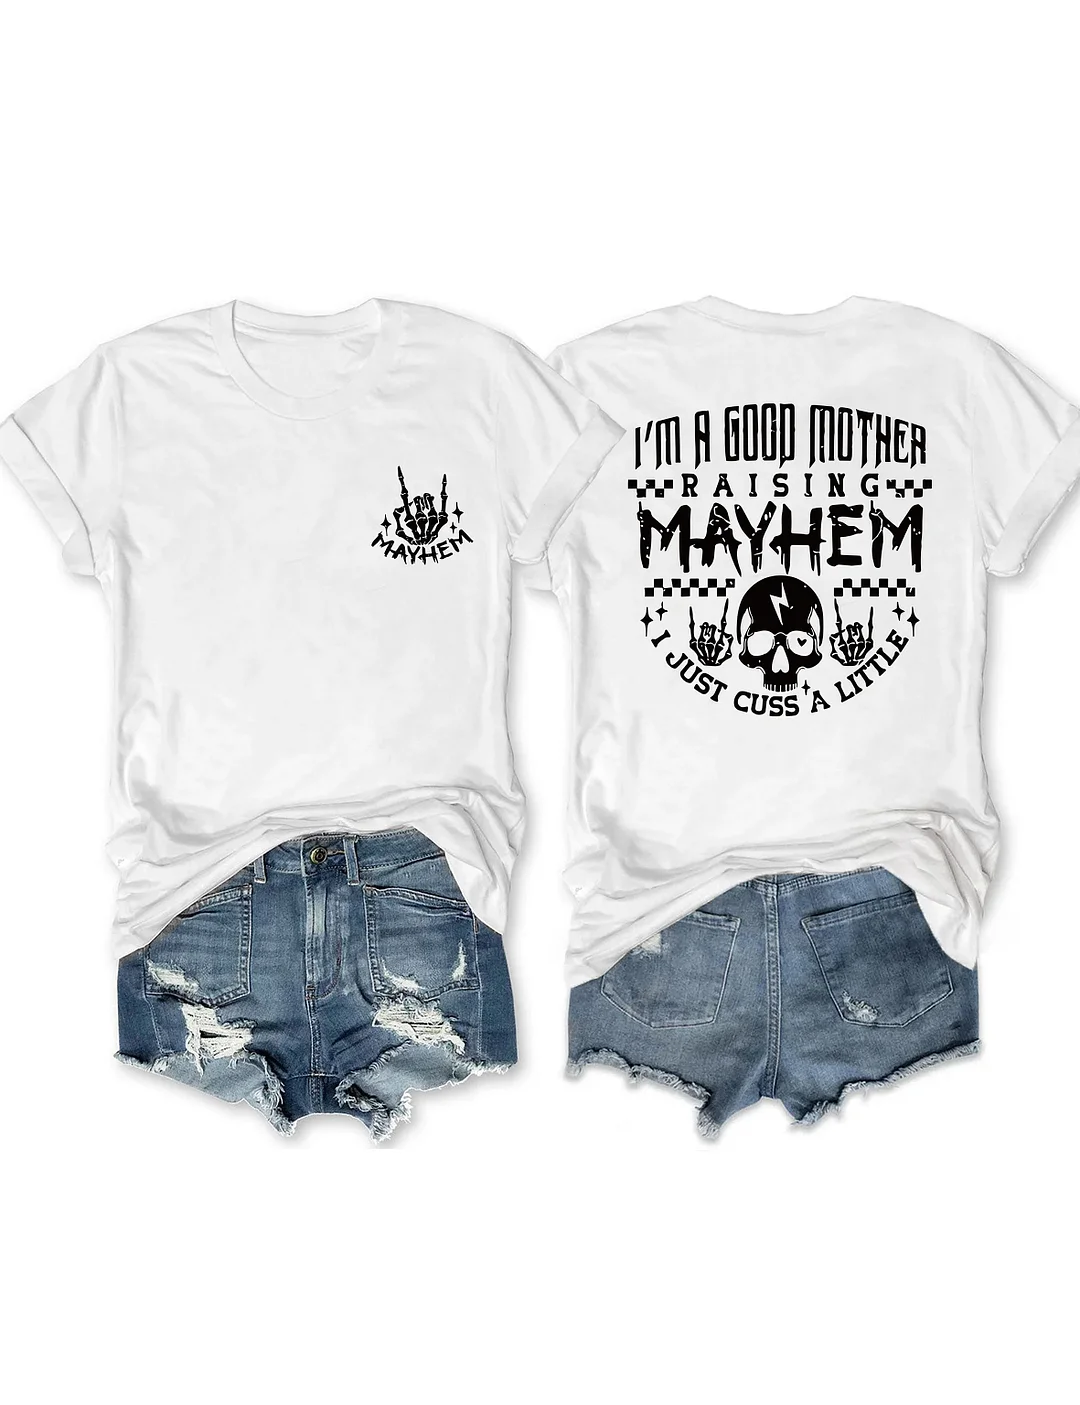 I’m a Good Mother Raising Mayhem T-Shirt